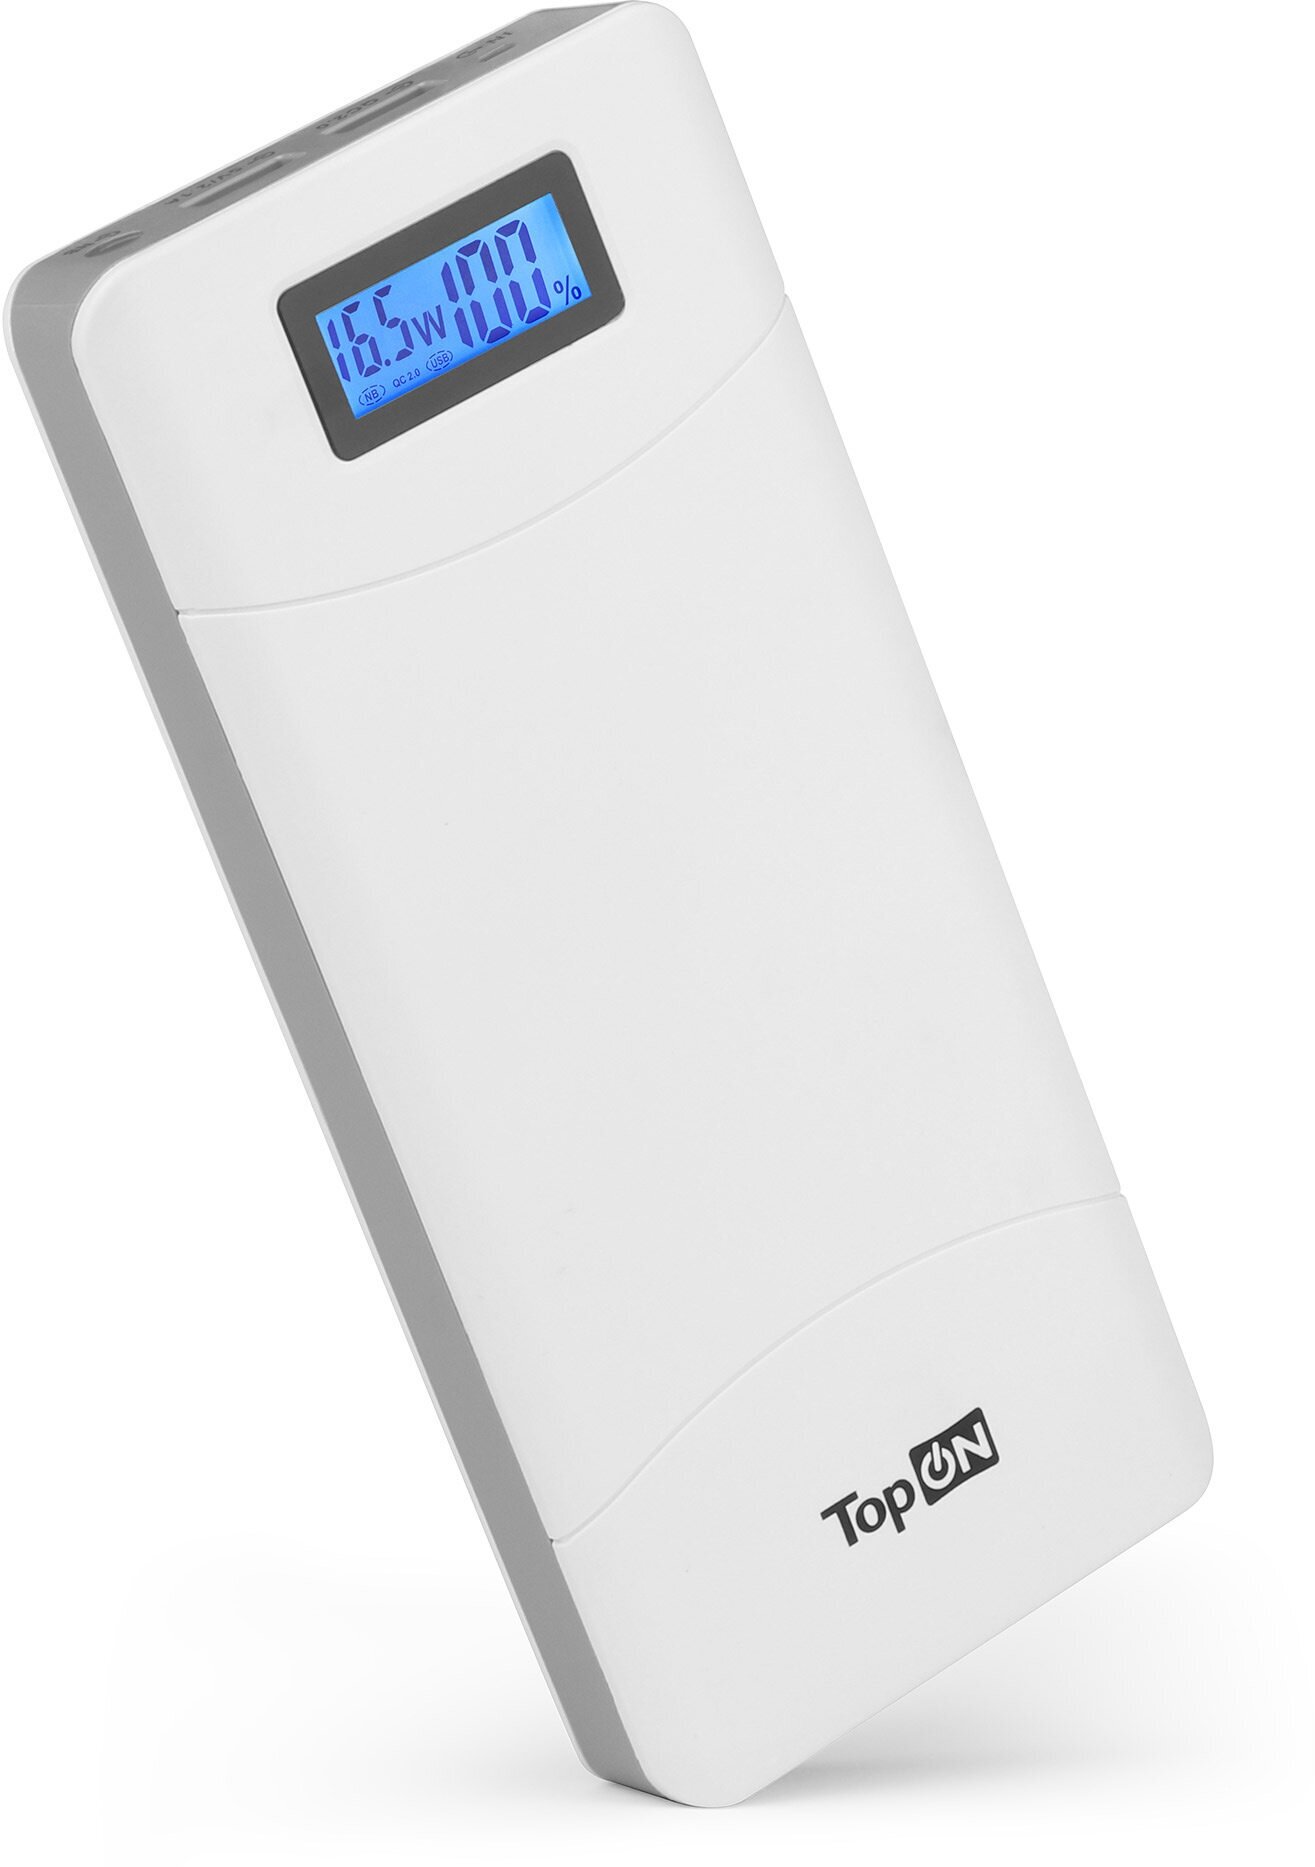 Внешний аккумулятор TopON TOP-T72/W 18000mAh (66.6Wh) QC 2.0, 2 USB для ноутбука, планшета, смартфона и аккумулятора авто. Белый